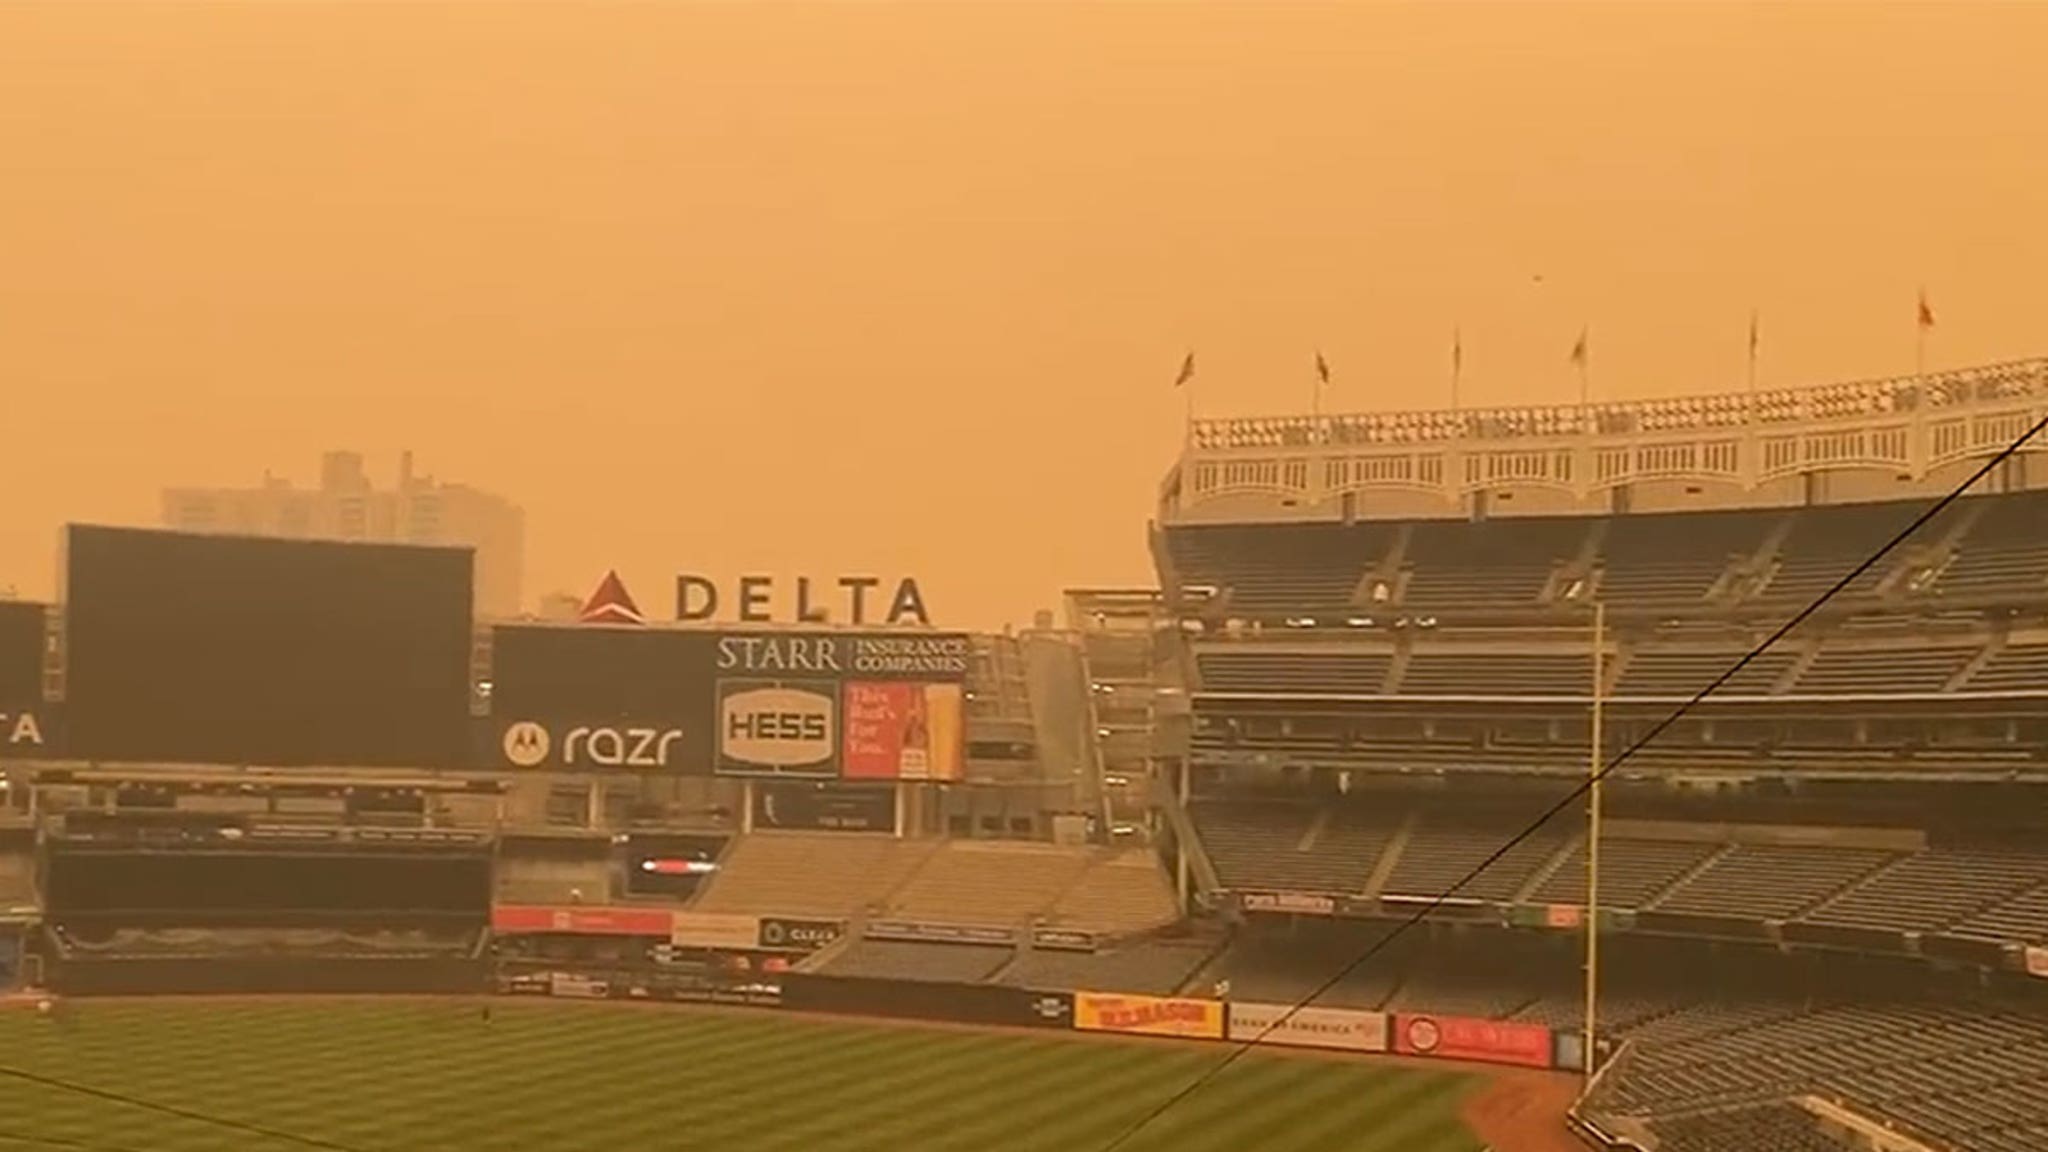 MLB considering postponing White Sox vs. Yankees game due to wildfire smoke